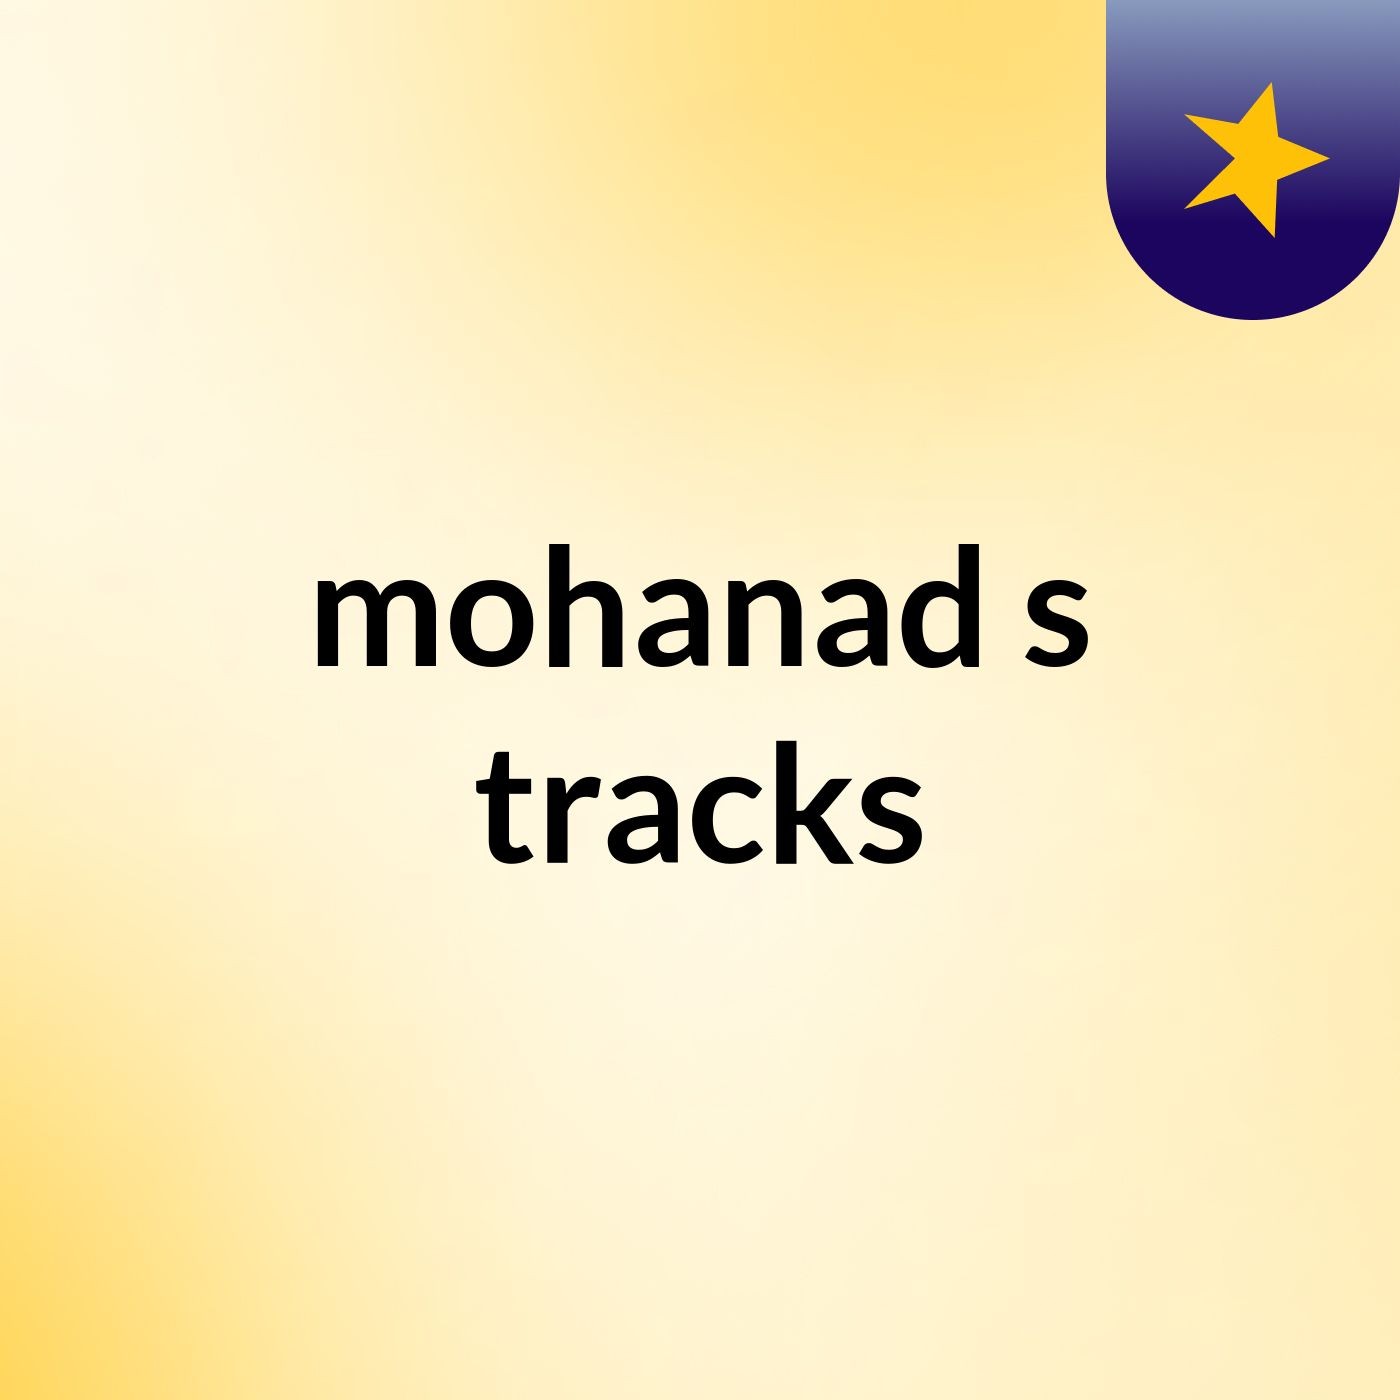 mohanad's tracks